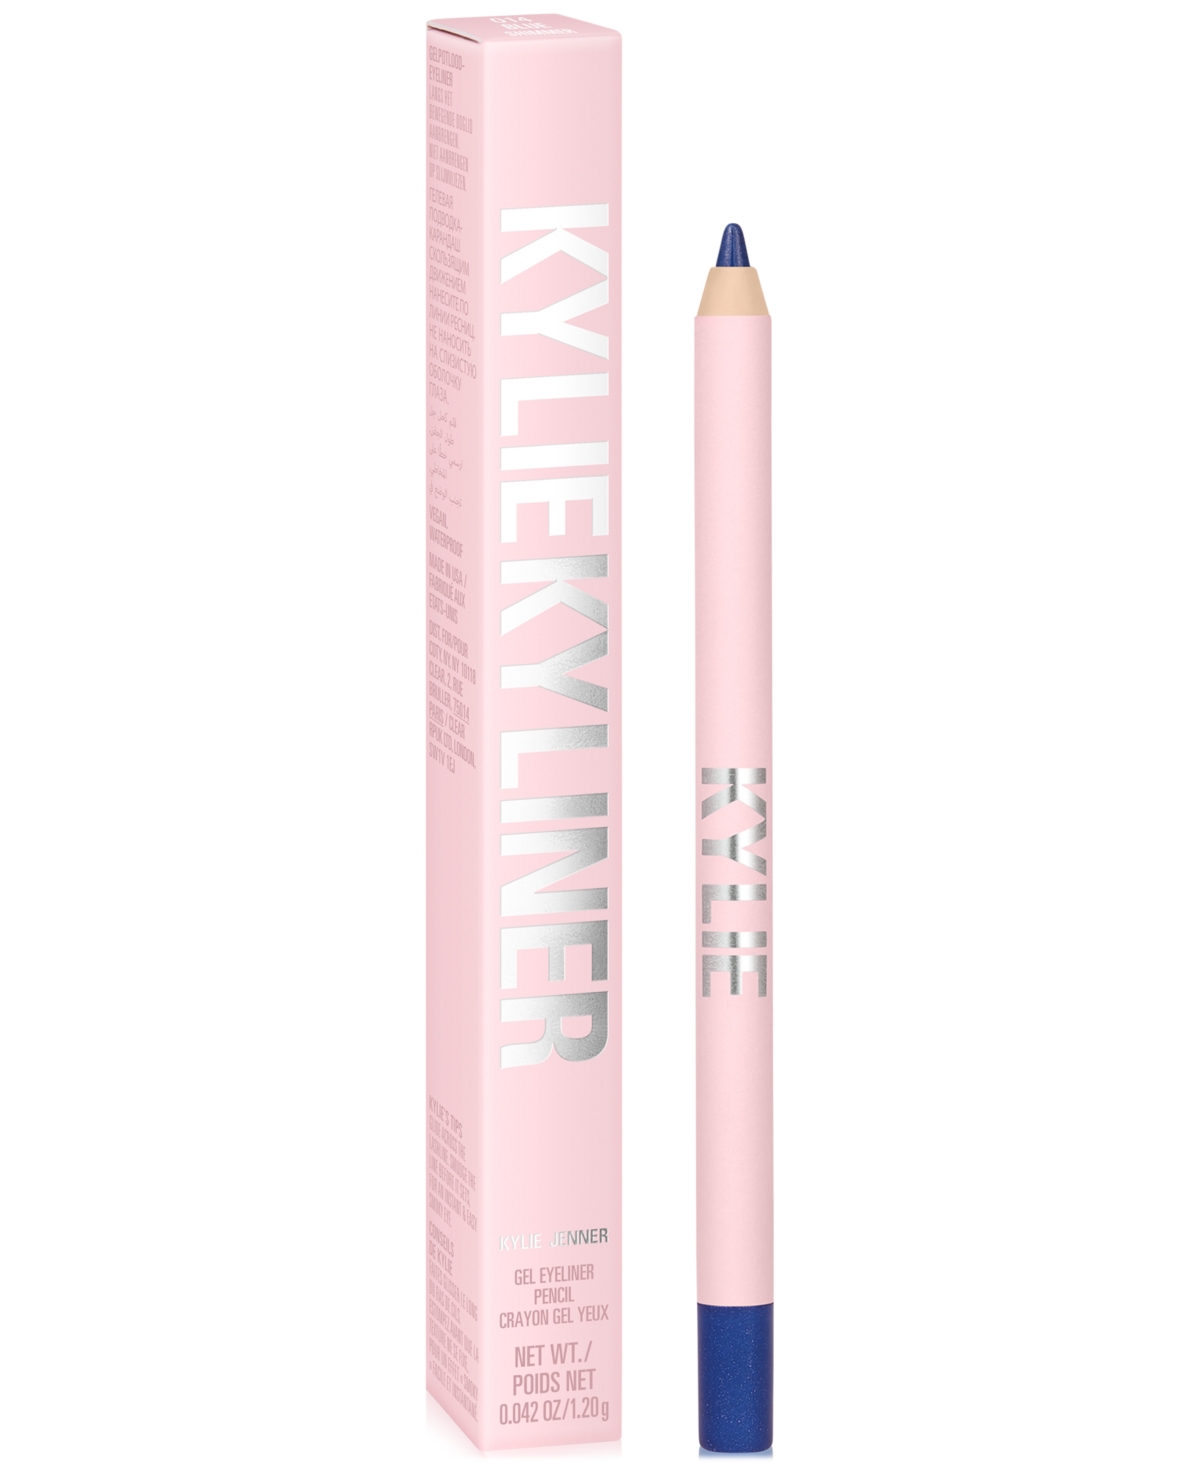 Kylie Cosmetics Kyliner Gel Eyeliner Pencil In Shimmery Blue